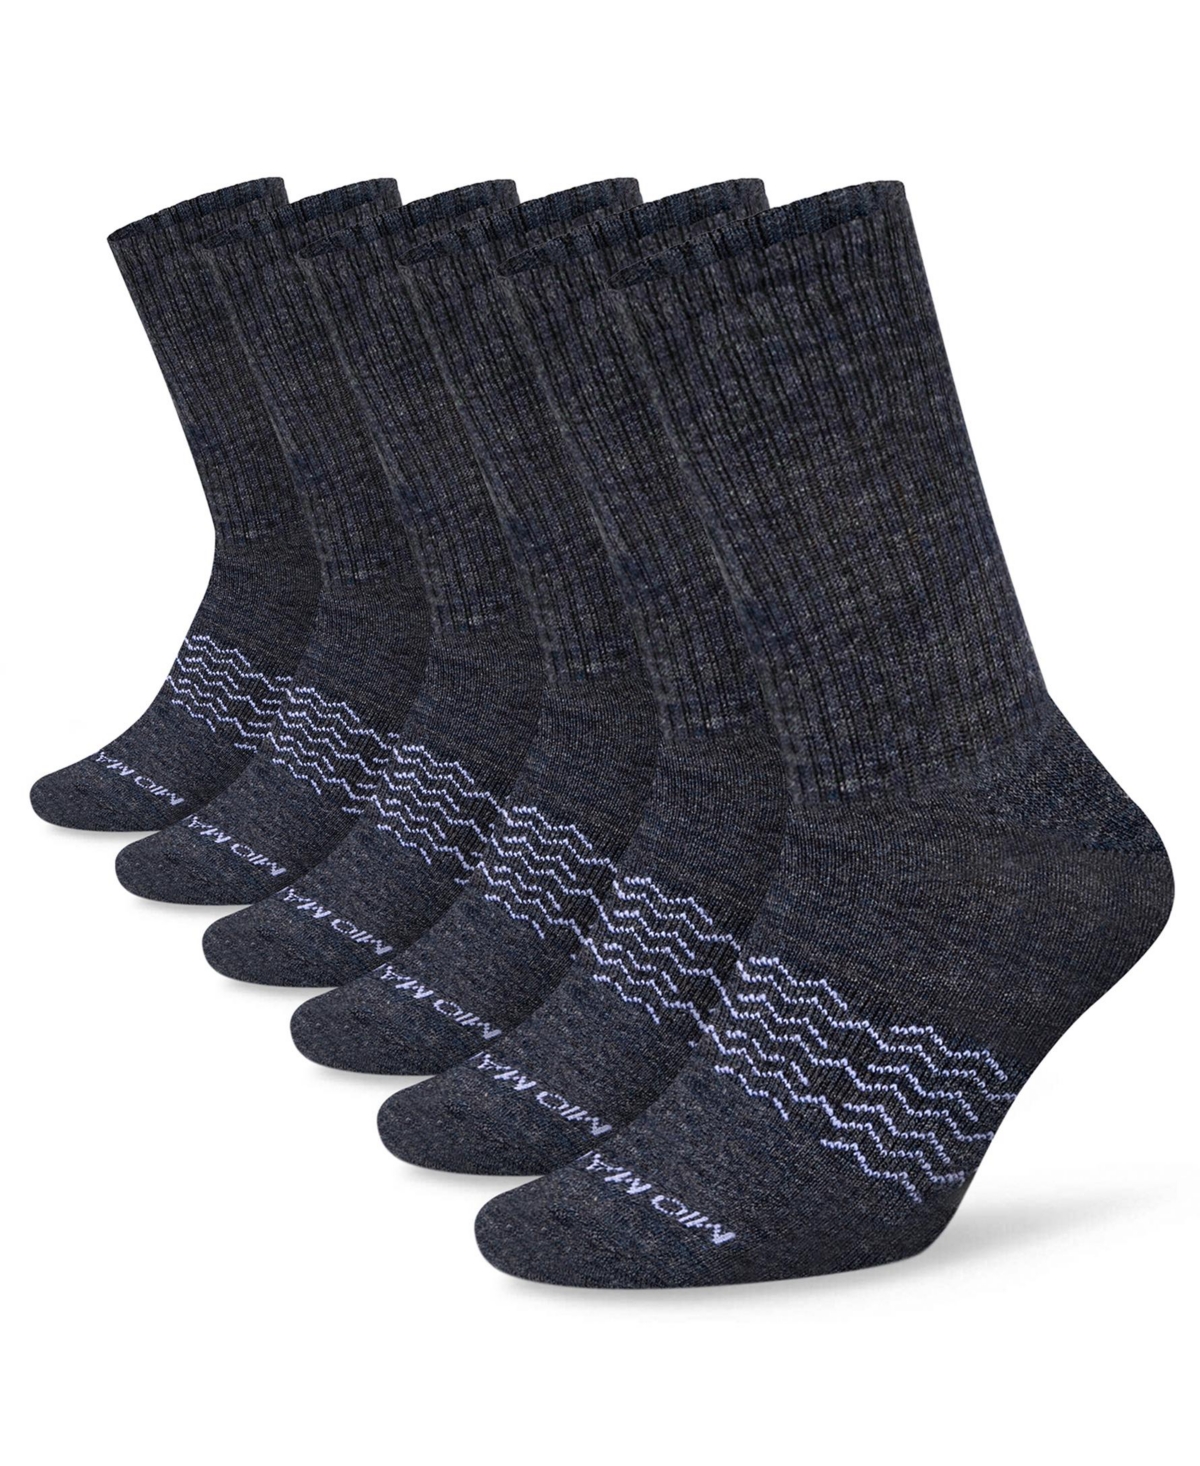 Men's Moisture Control Athletic Crew Socks 6 Pack - Black - space dye